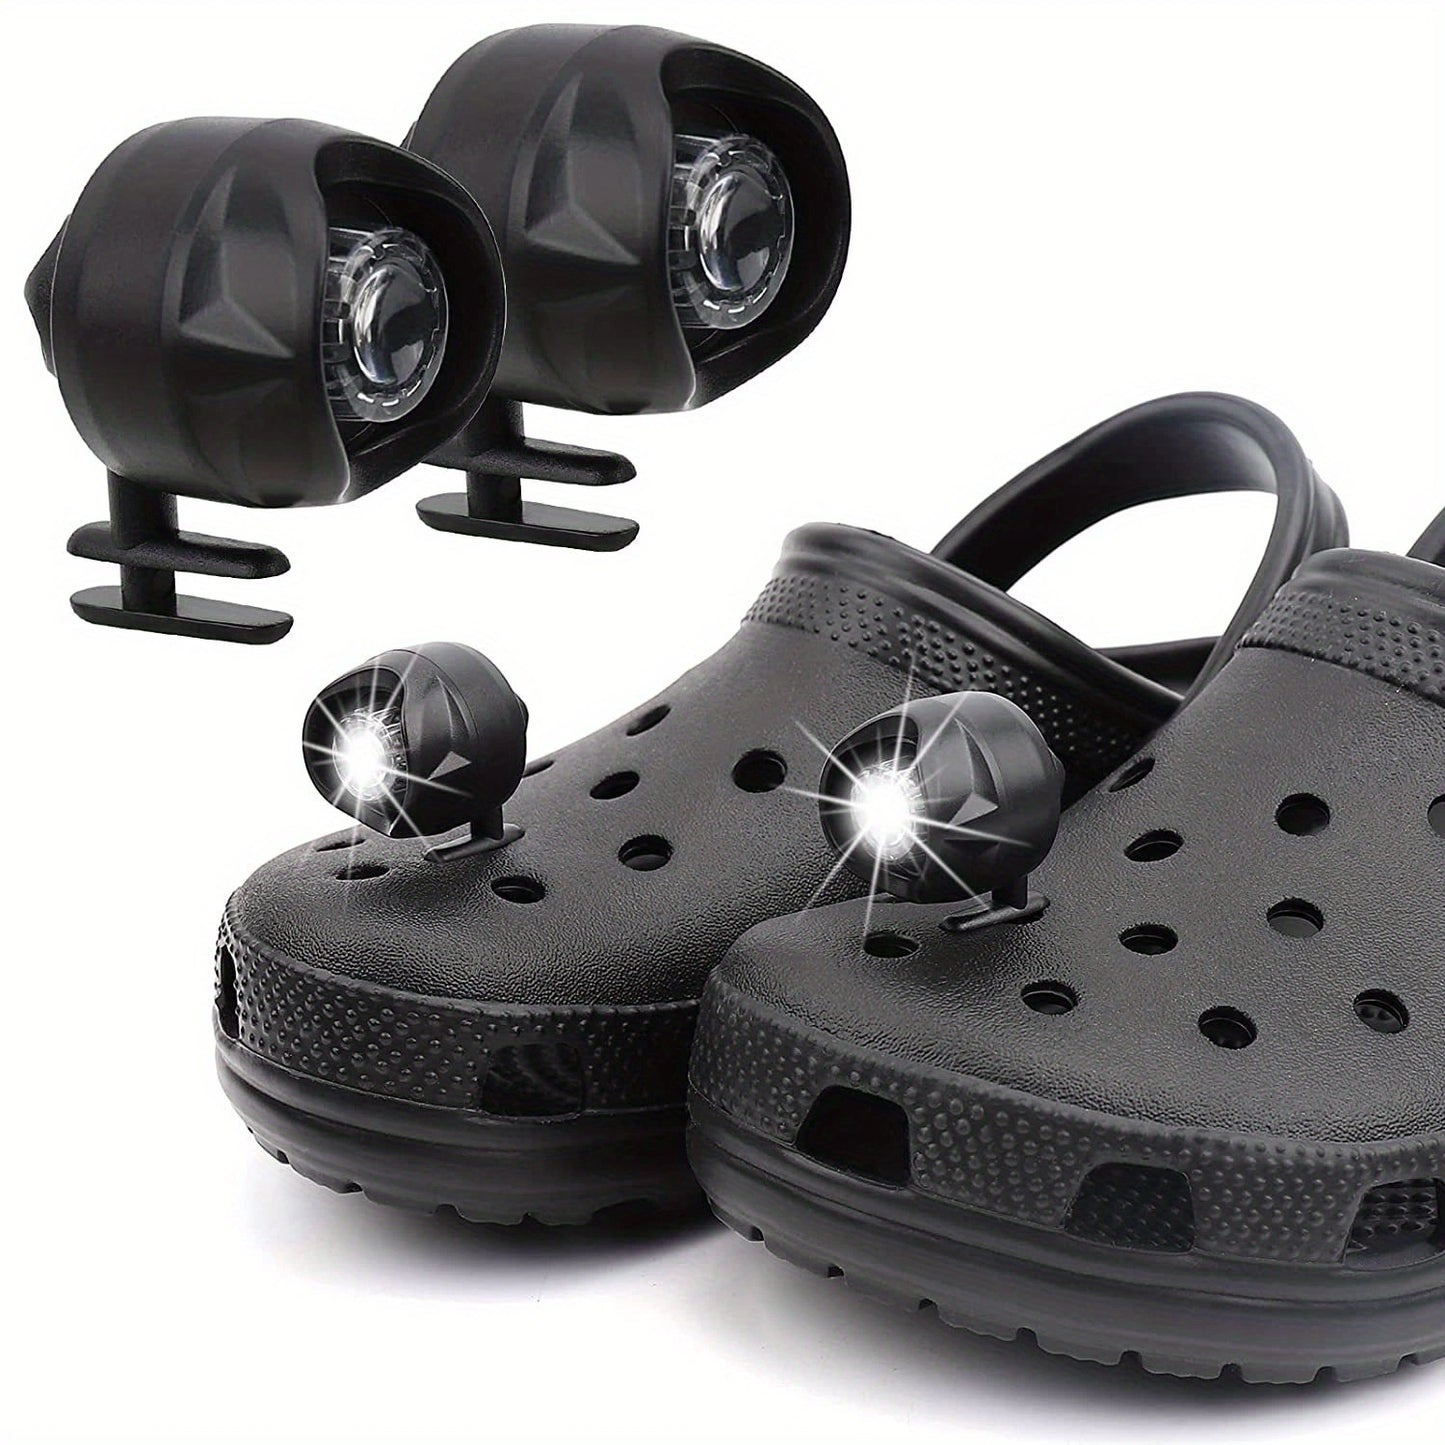 Croc Head Lights - Working Headlights Charm for Crocs (2PC)